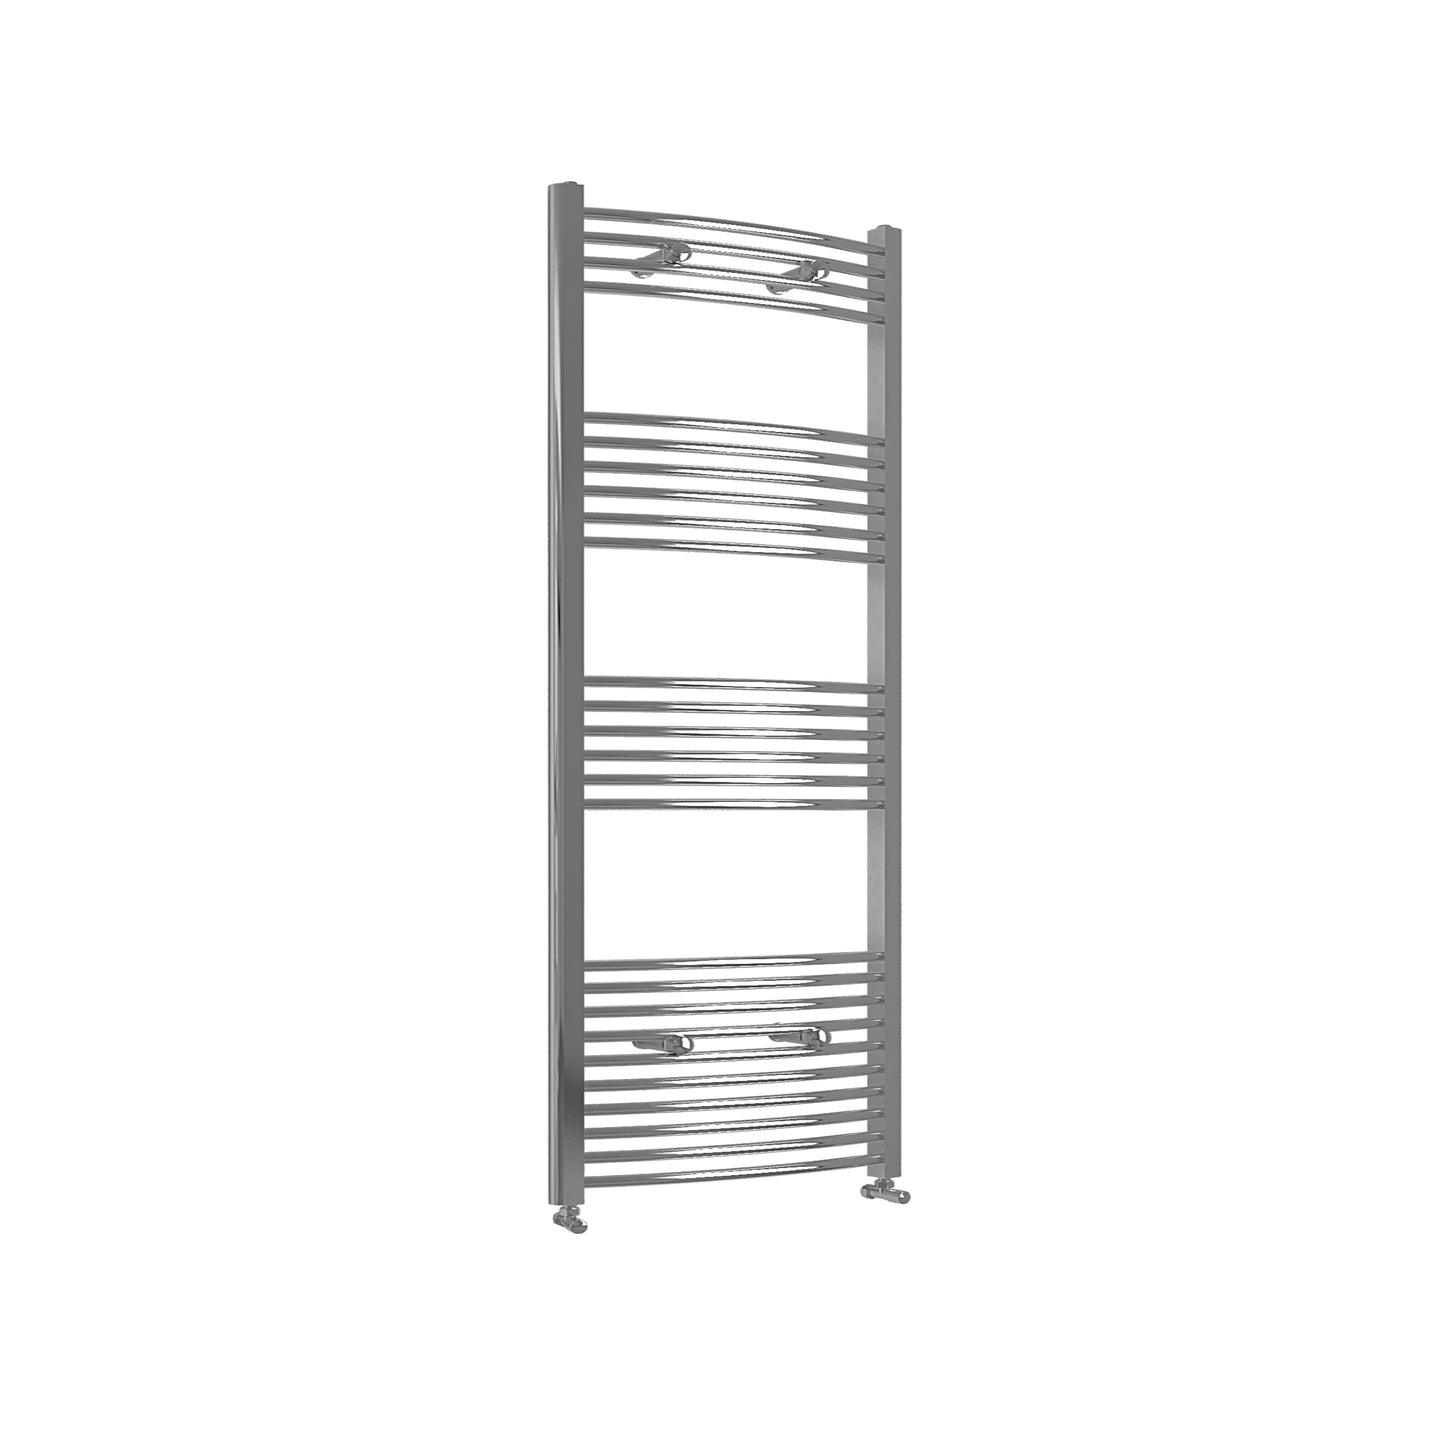 Chrome Bathroom Central Heating Towel Rail Curved Designer Ladder Radiator Warmer